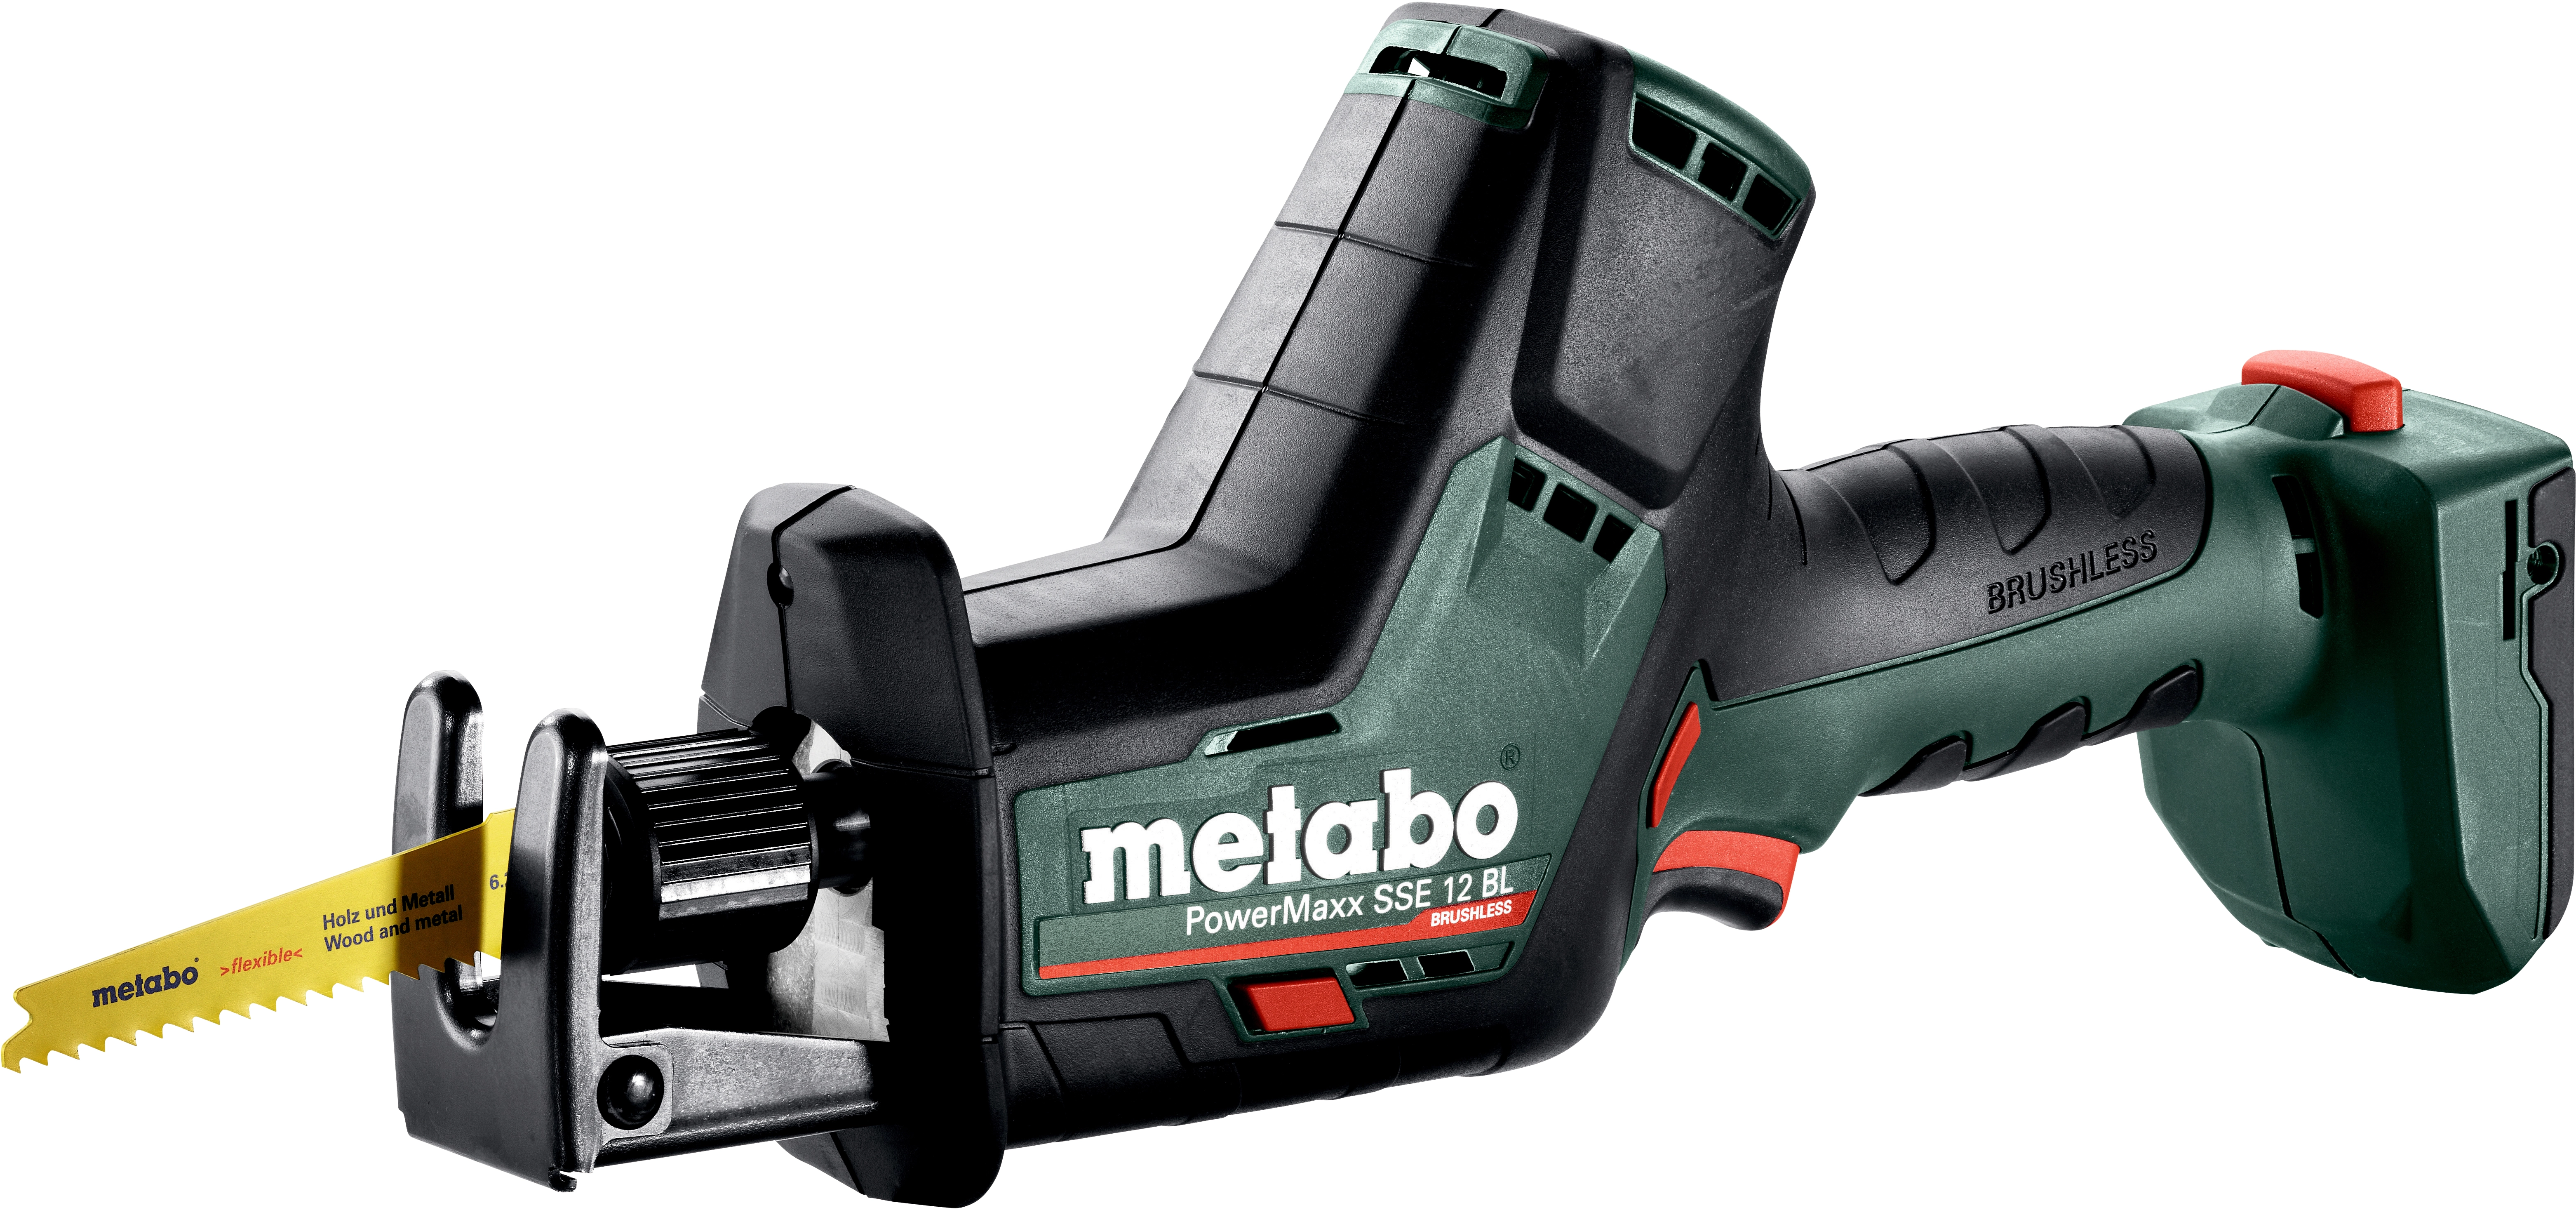 Metabo PowerMaxx bei Akku-Säbelsäge Kunststoffkoffer OBI BL im SSE kaufen 12